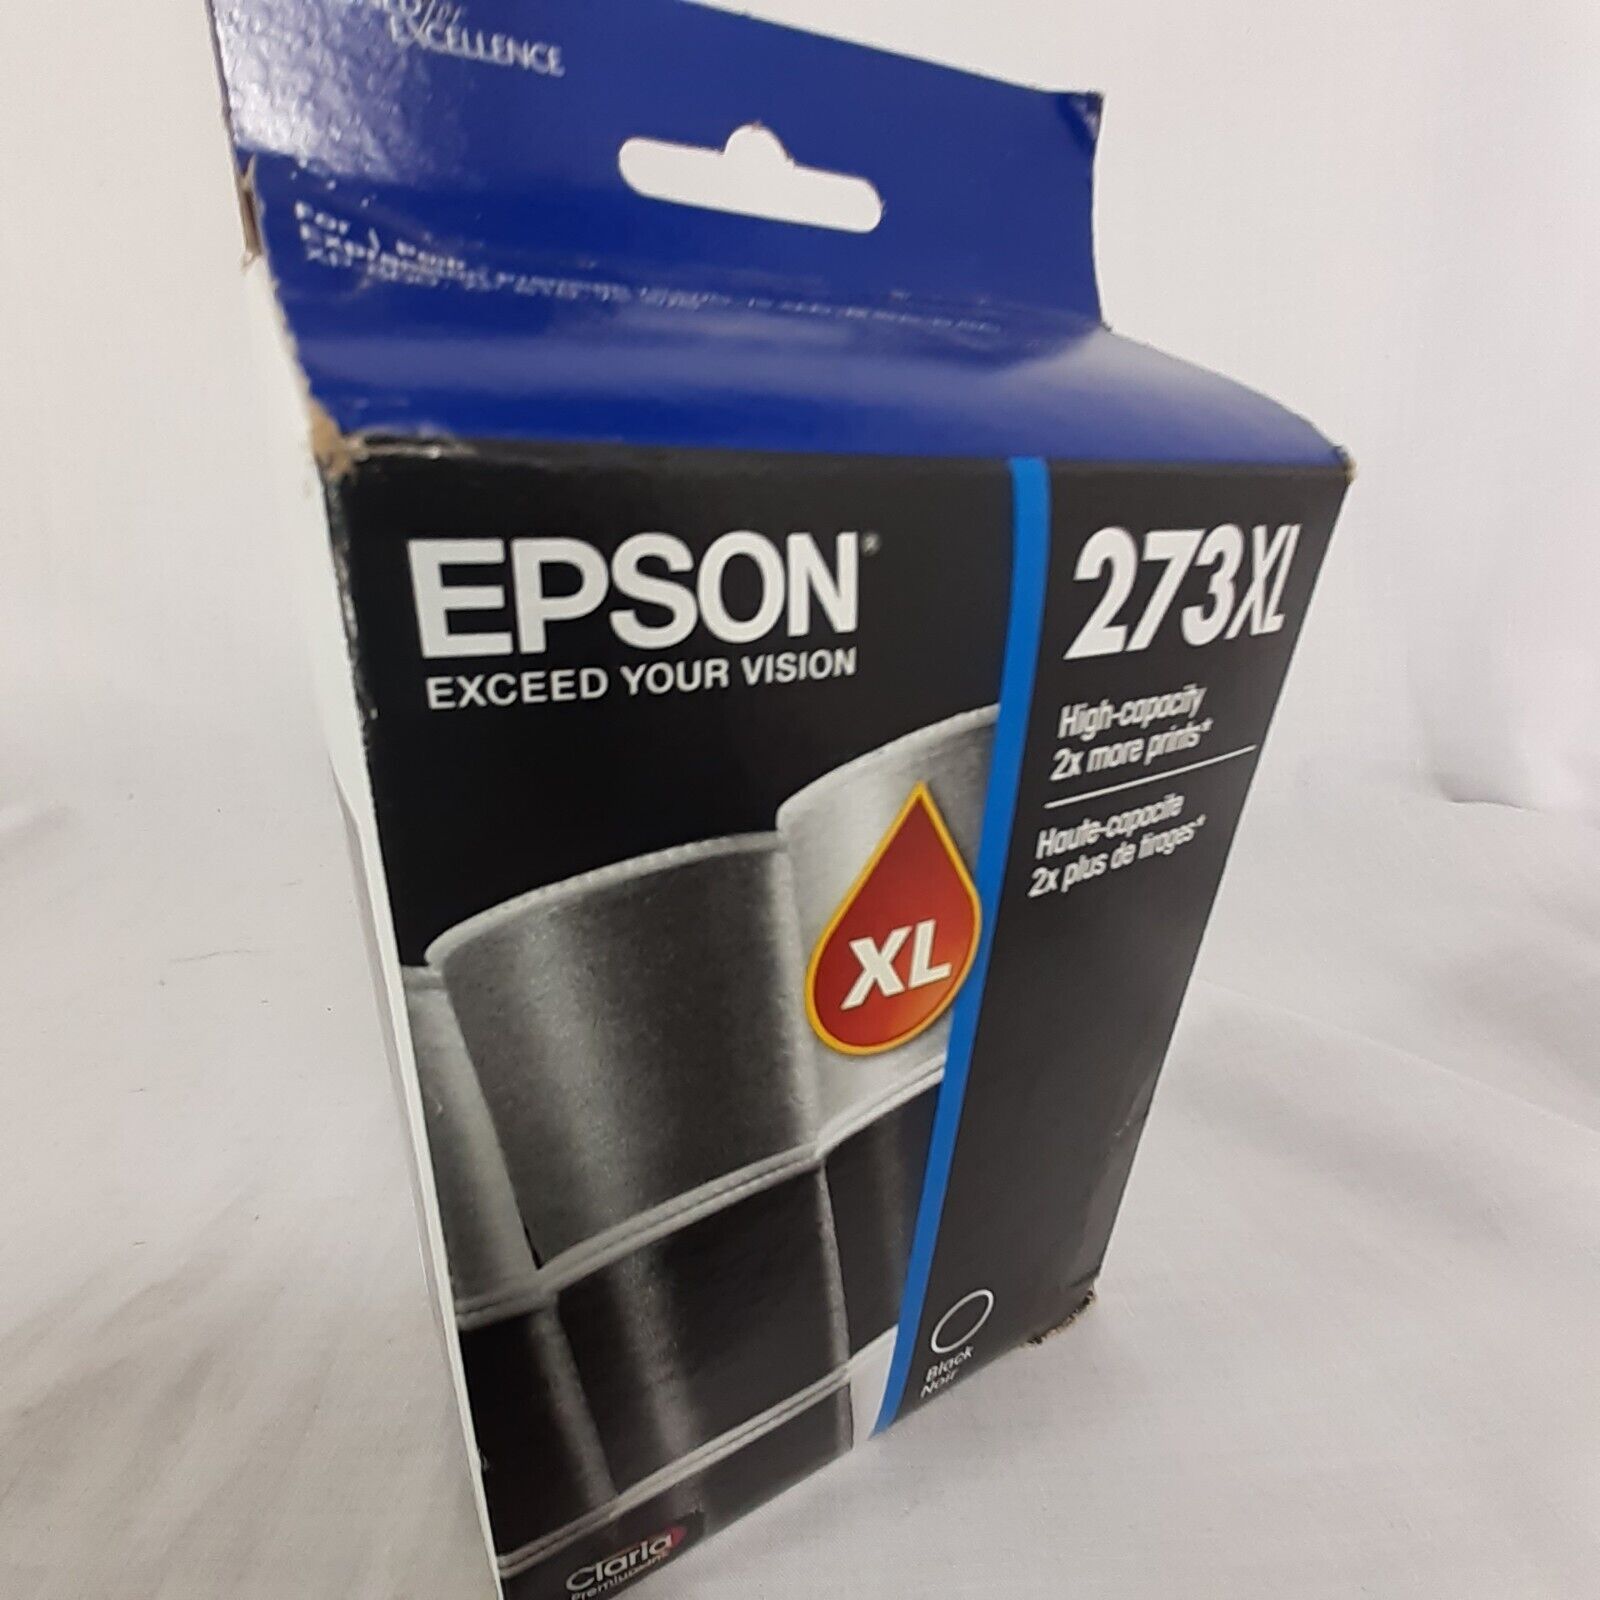 Epson 273XL High Capacity 2 Times More Prints Black Noir Ink Cartridge Sealed